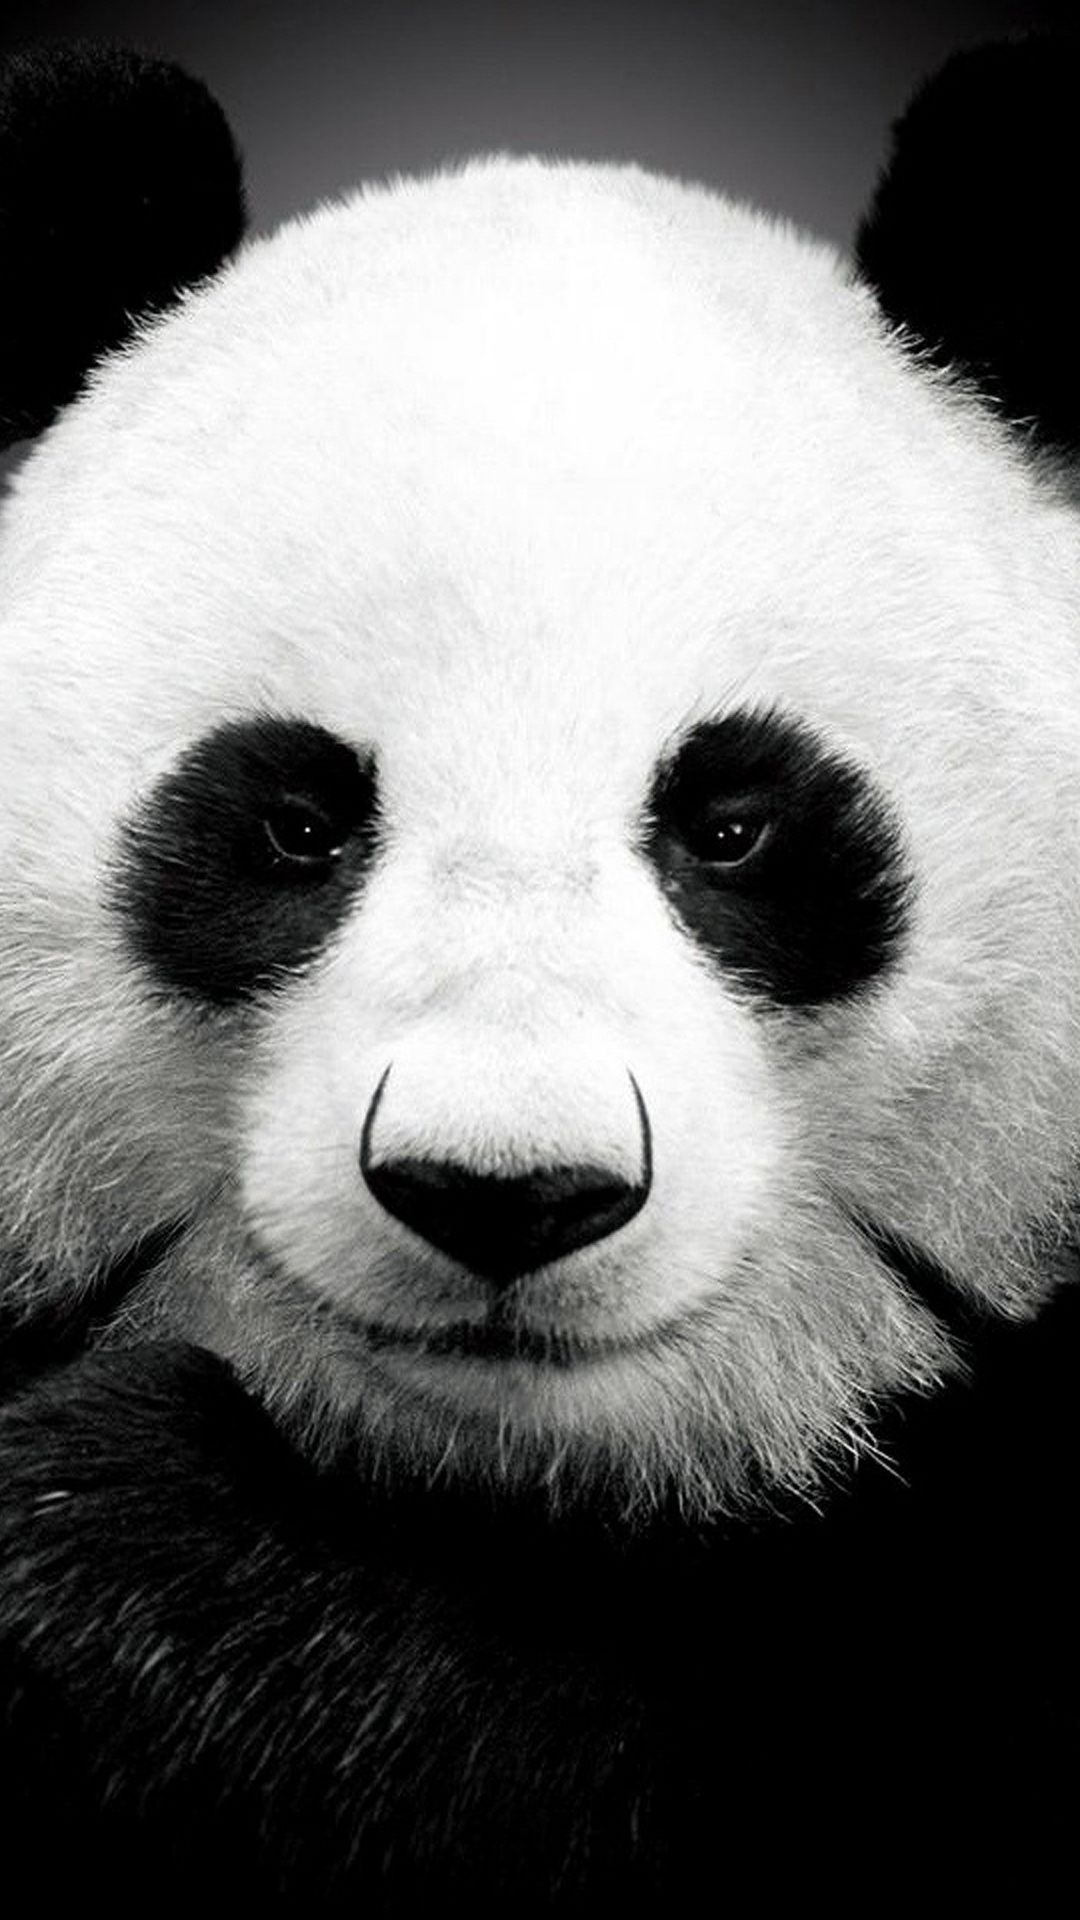 1080x1920 Panda bear Best htc one wallpapers, free and easy to download | Panda bear, Cute panda wallpaper, Panda